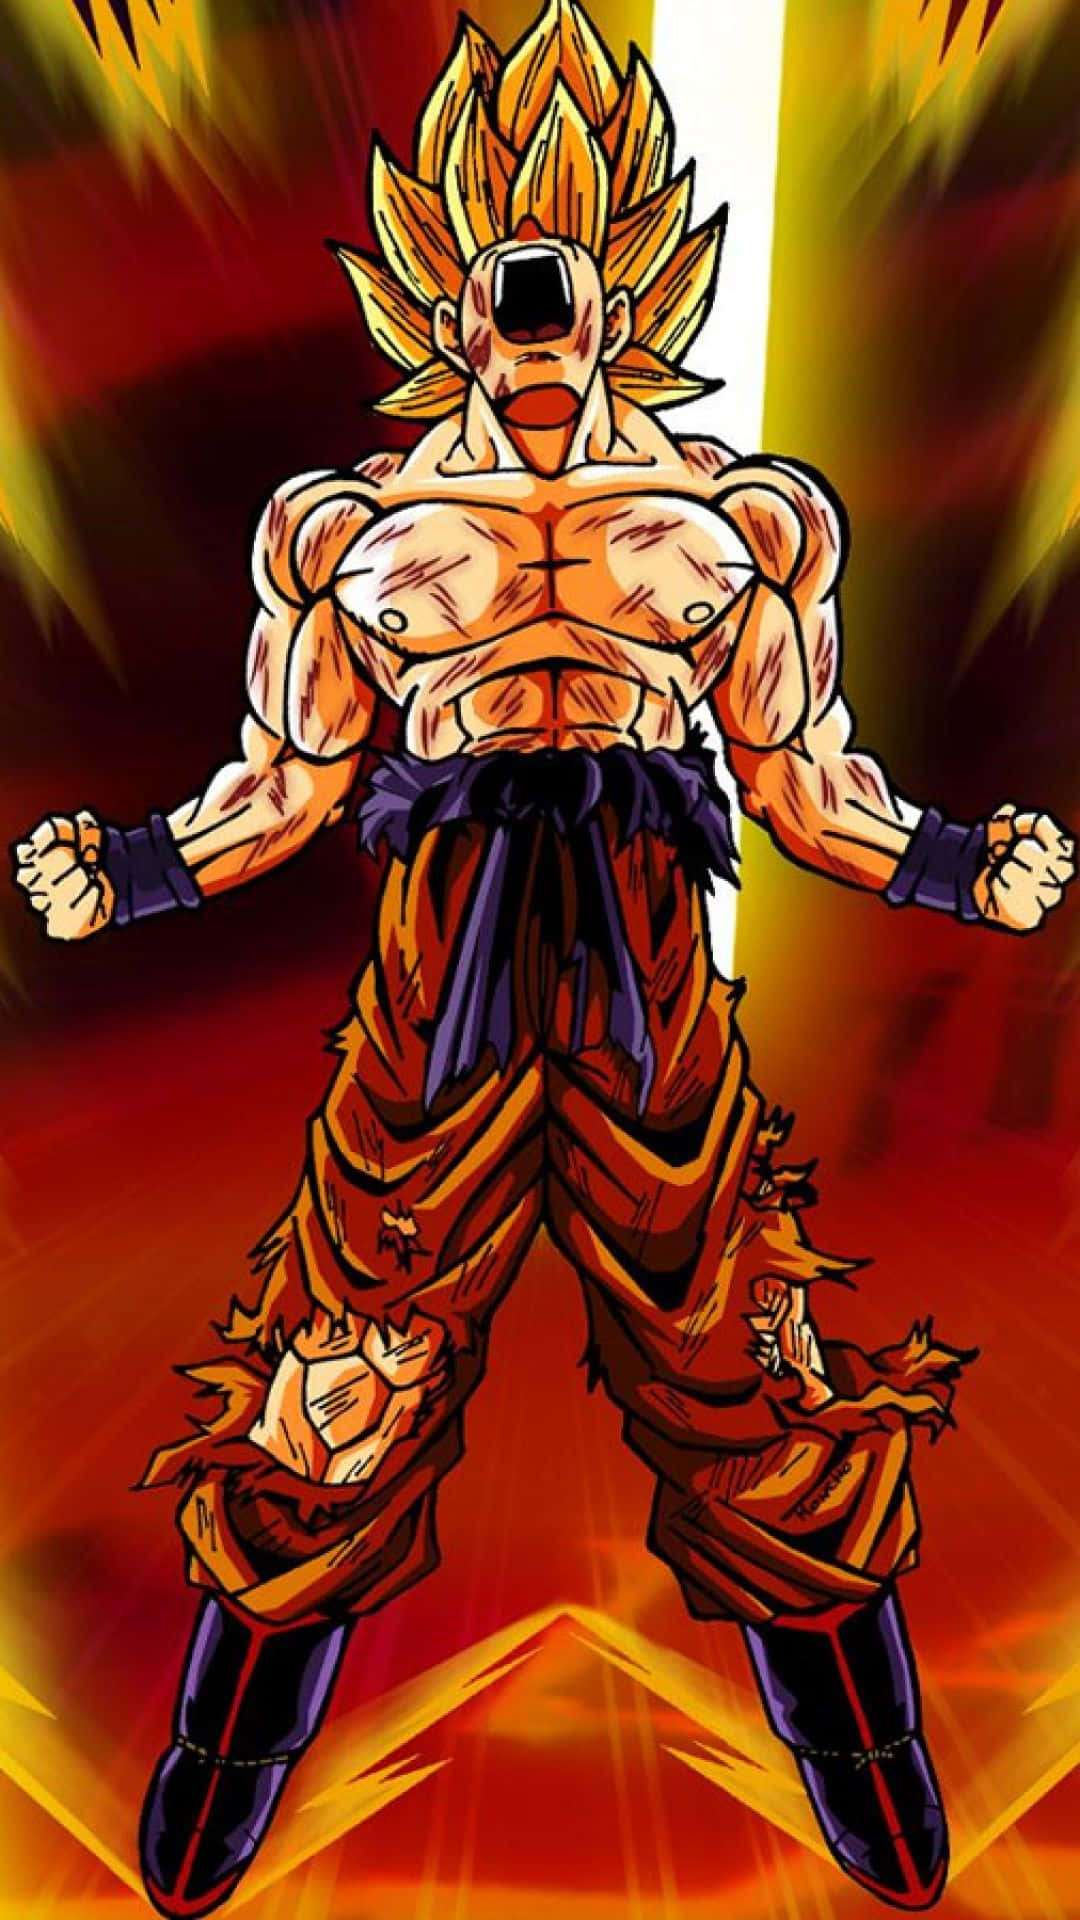 Super Saiyan Goku Dragon Ball Super iPhone Wallpaper